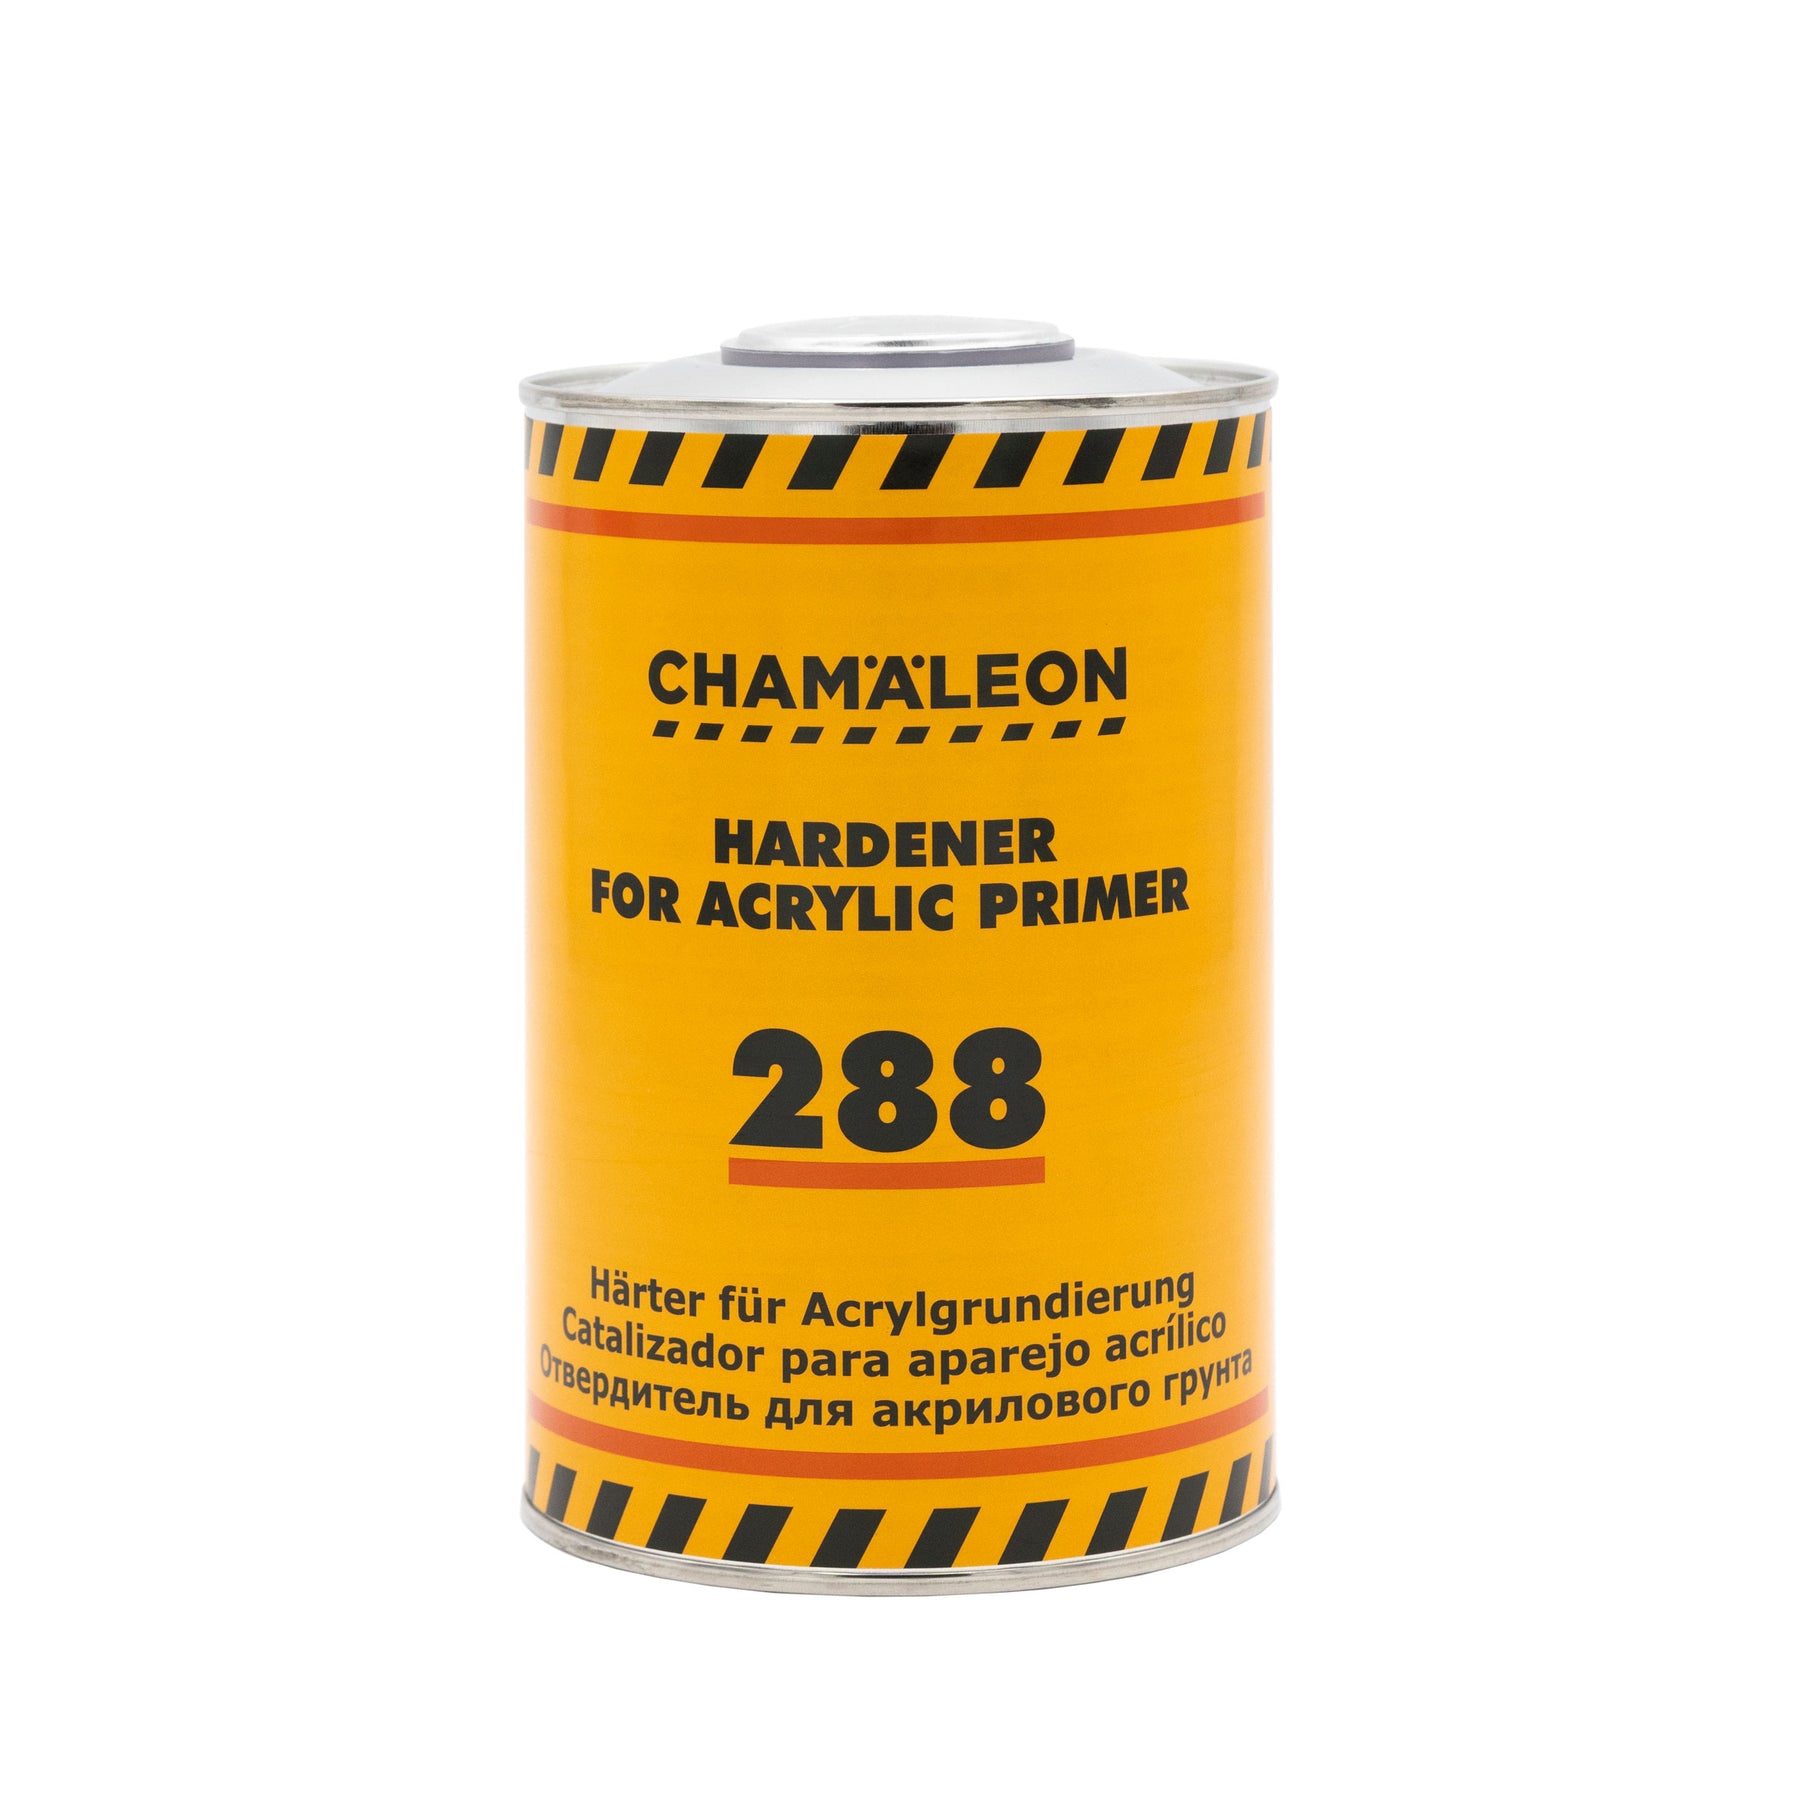 CHAMALEON Hardener 288 for Acrylic Primer 488